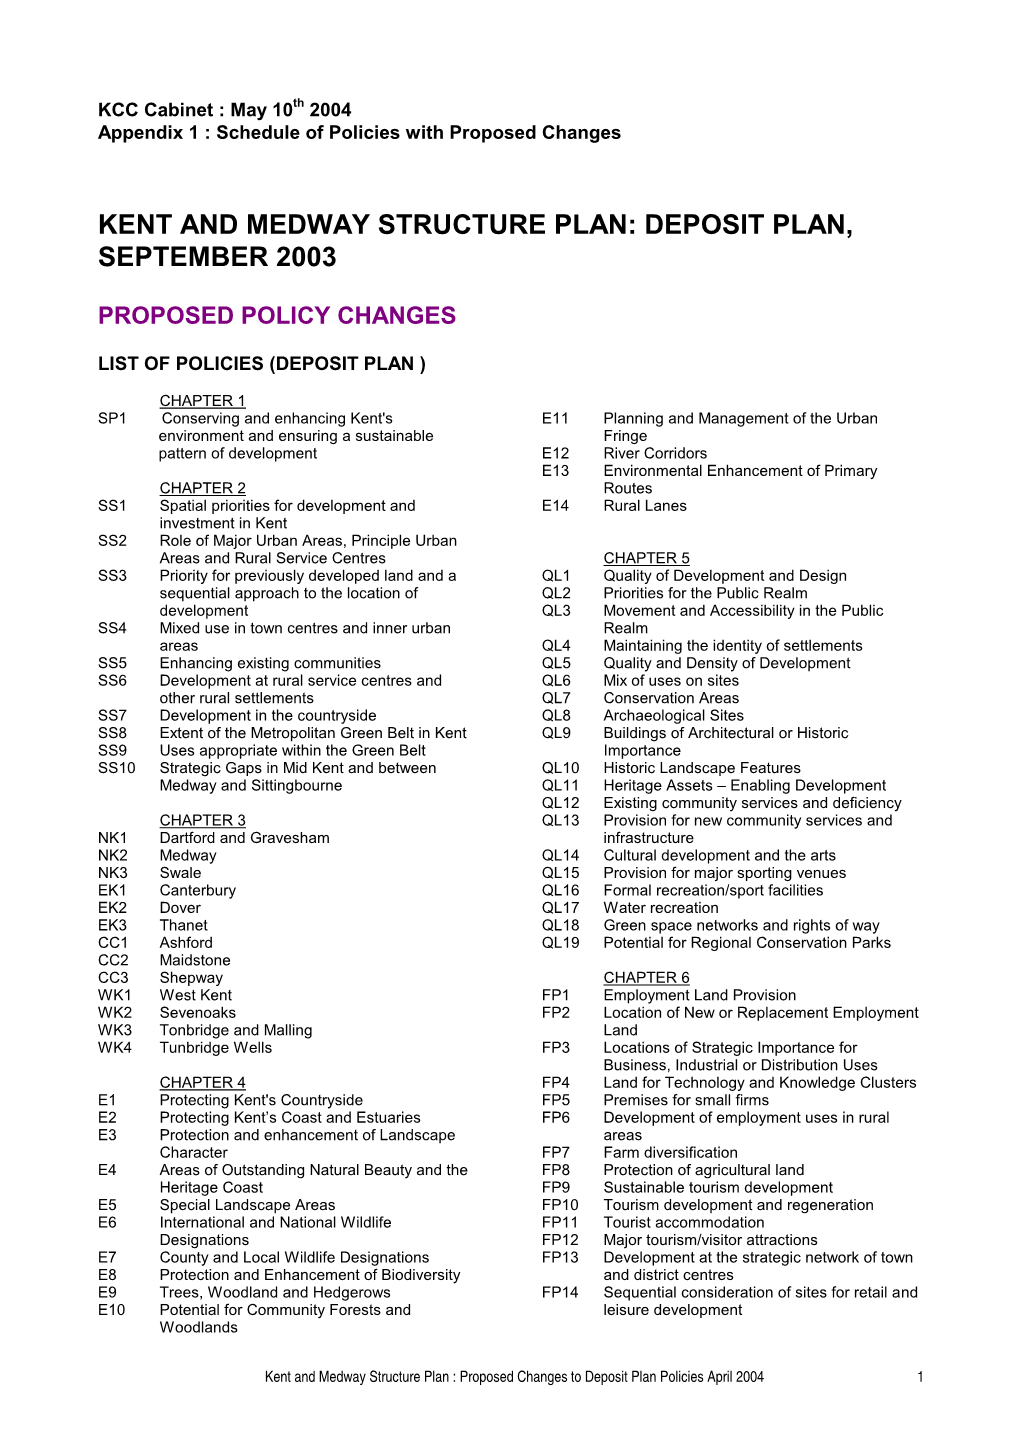 Kent and Medway Structure Plan: Deposit Plan, September 2003